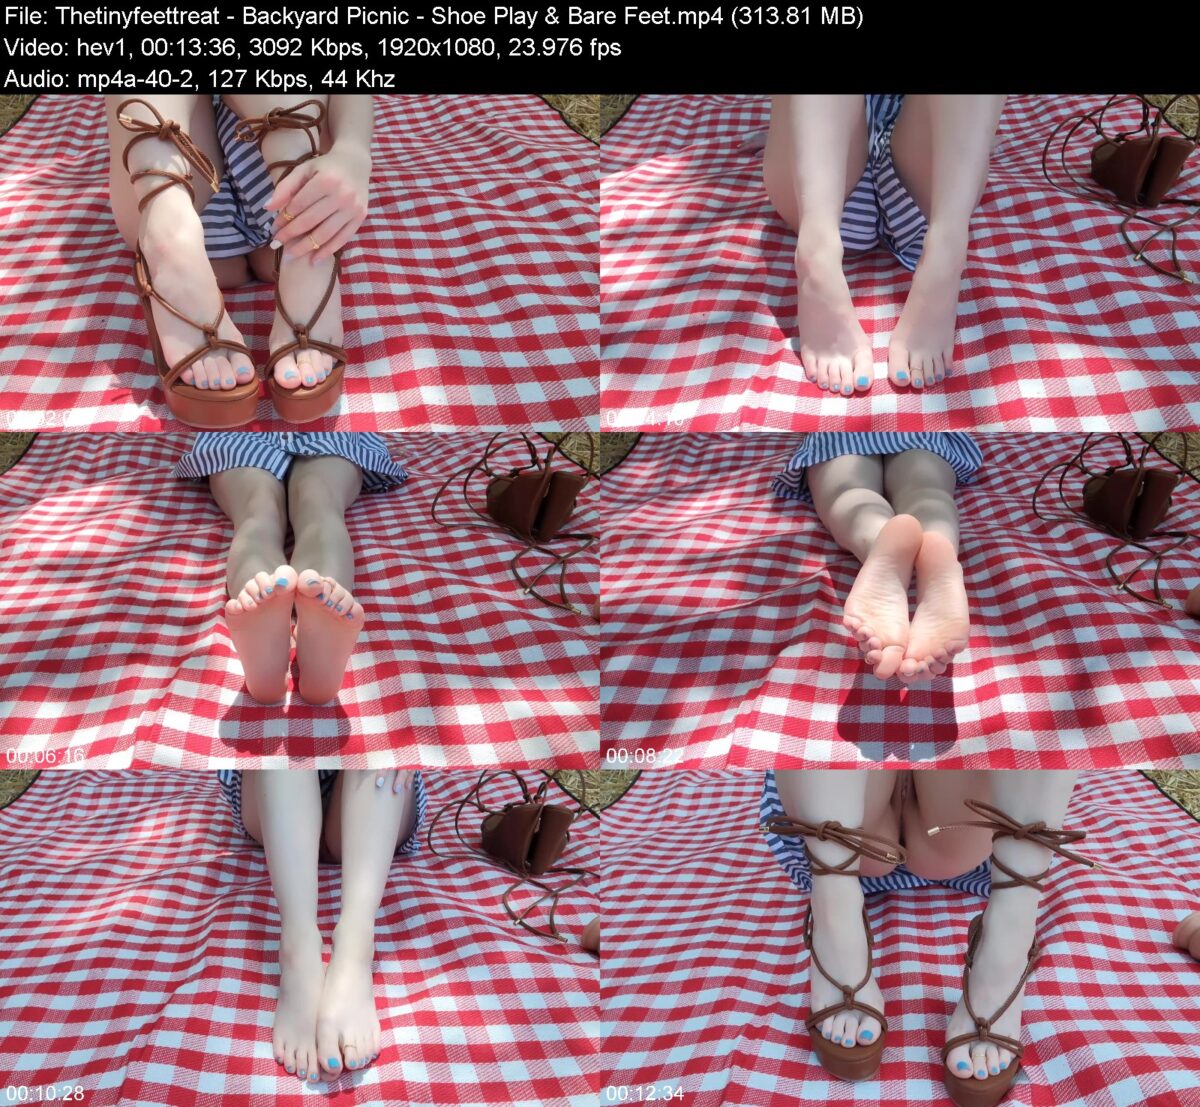 Thetinyfeettreat - Backyard Picnic - Shoe Play & Bare Feet